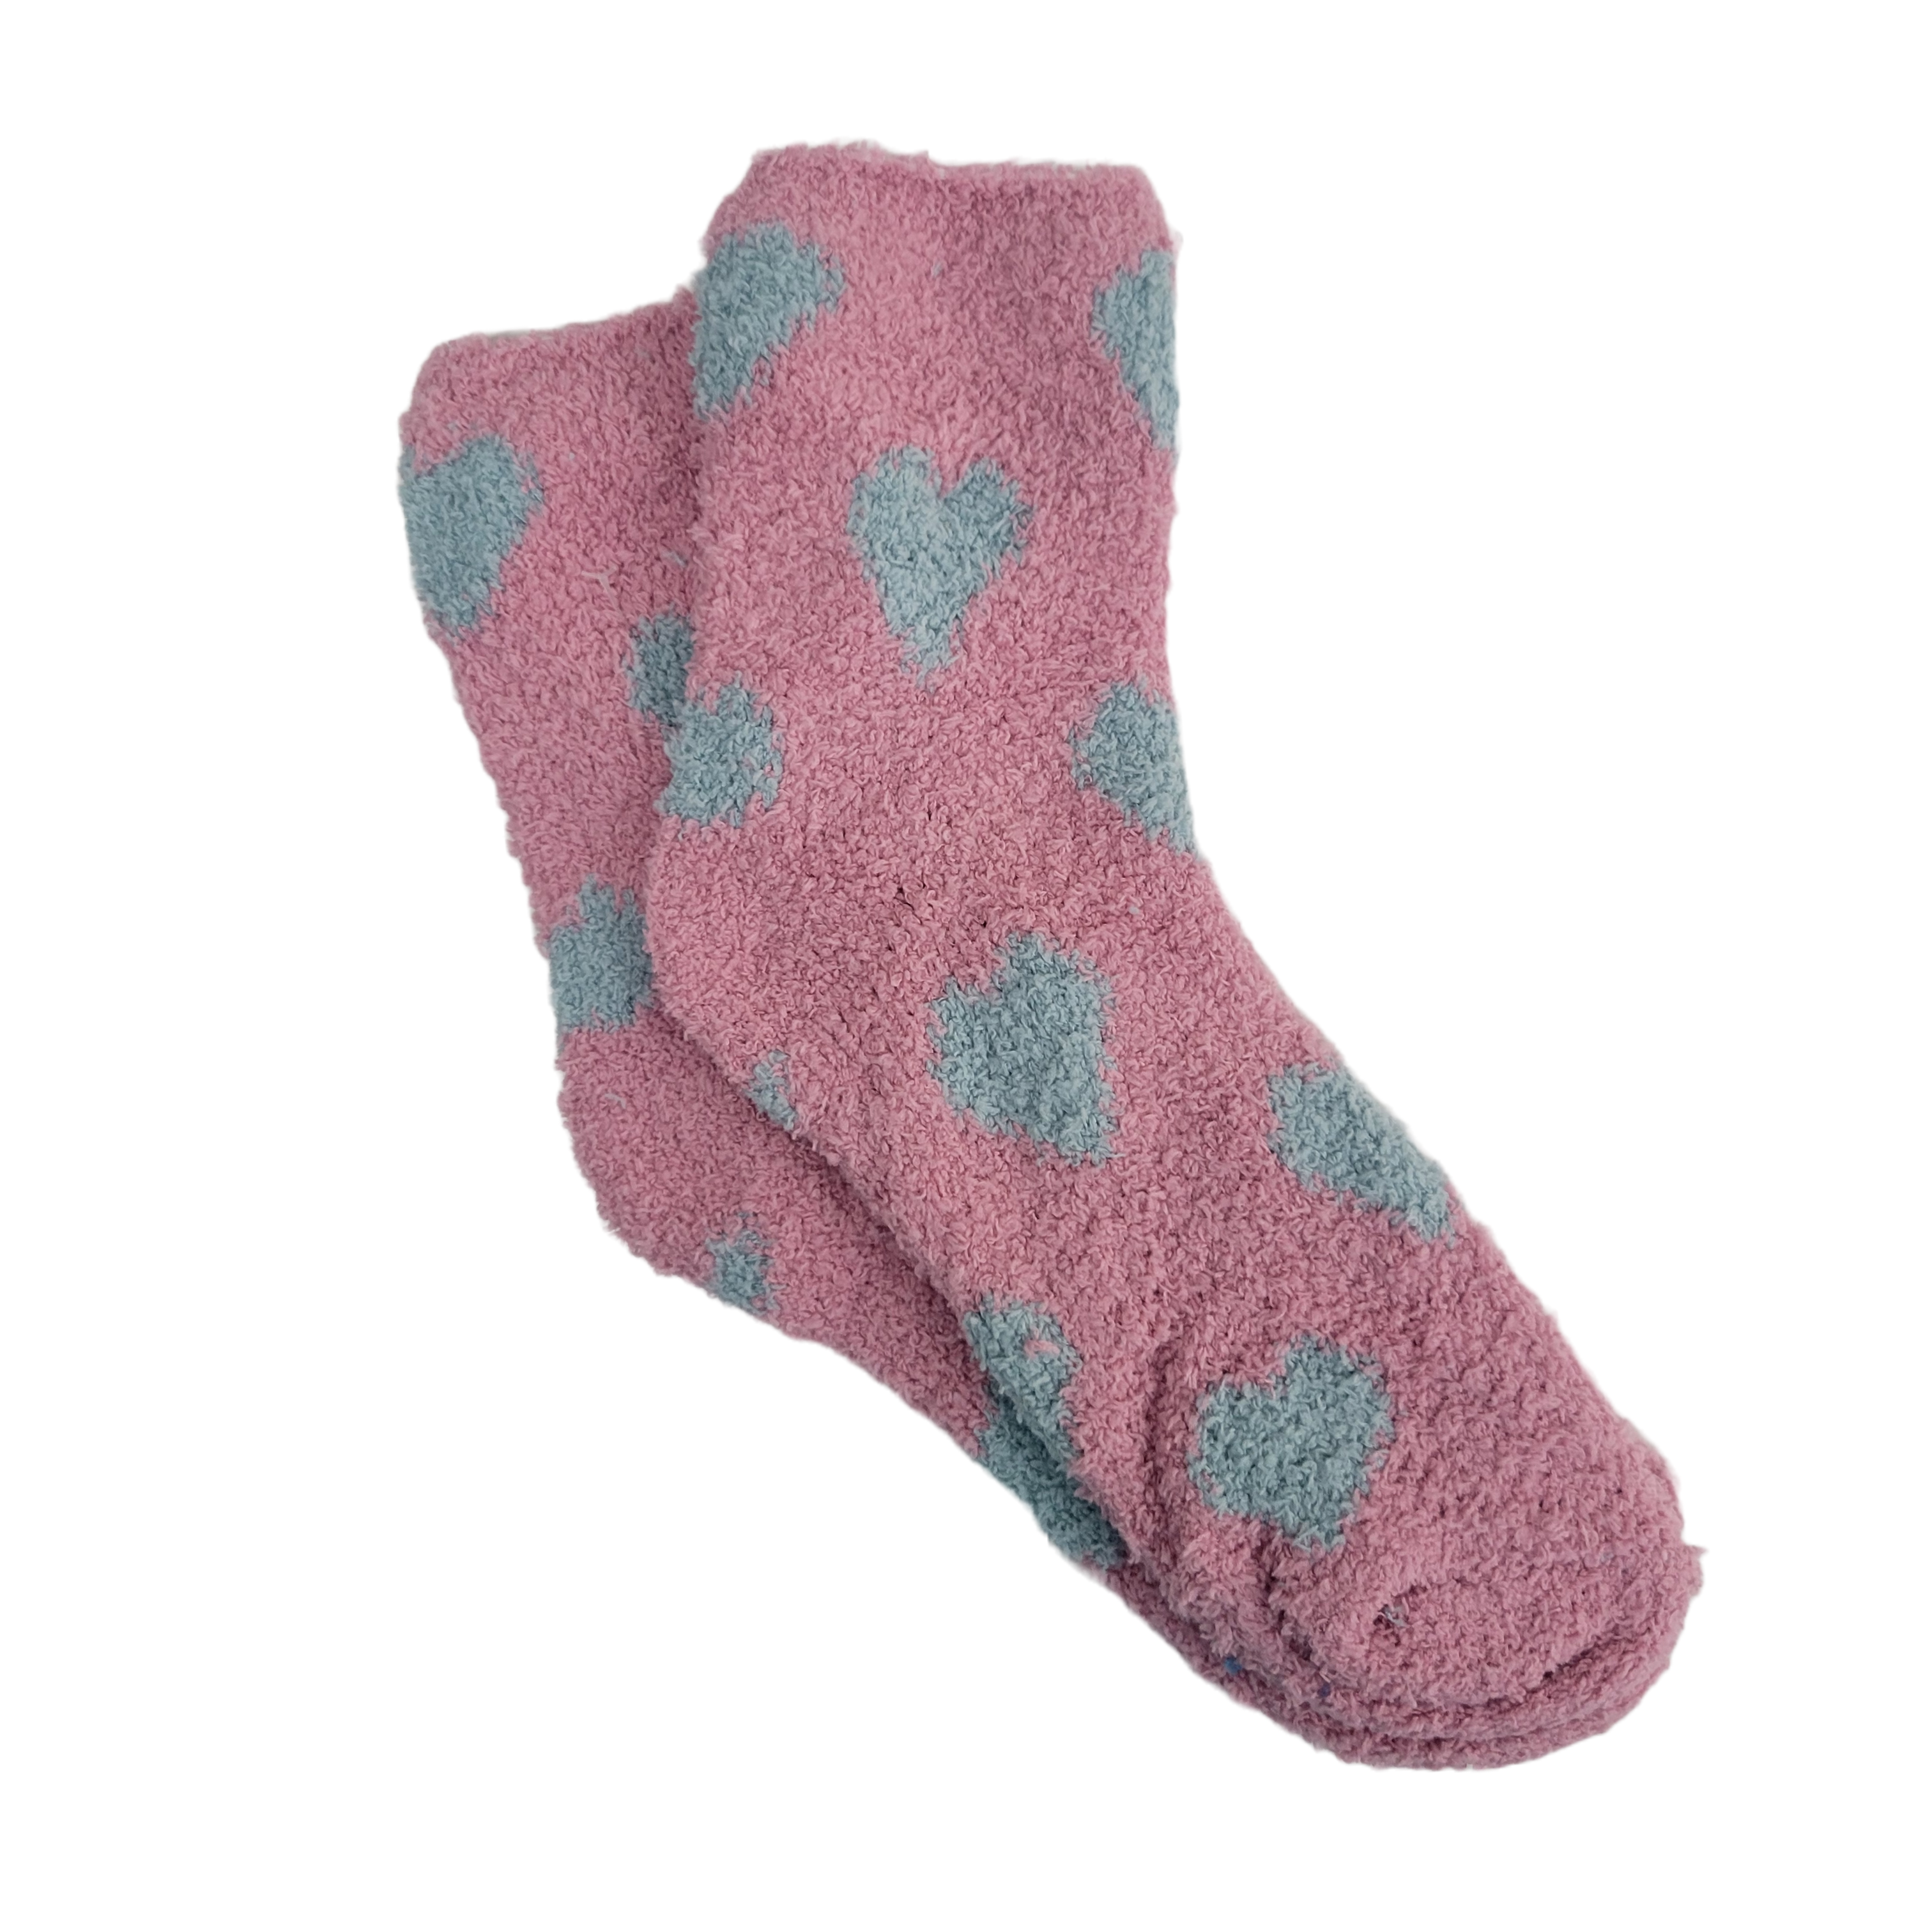 Heart Patterned Fuzzy Socks from the Sock Panda (Pink w/Baby Blue)